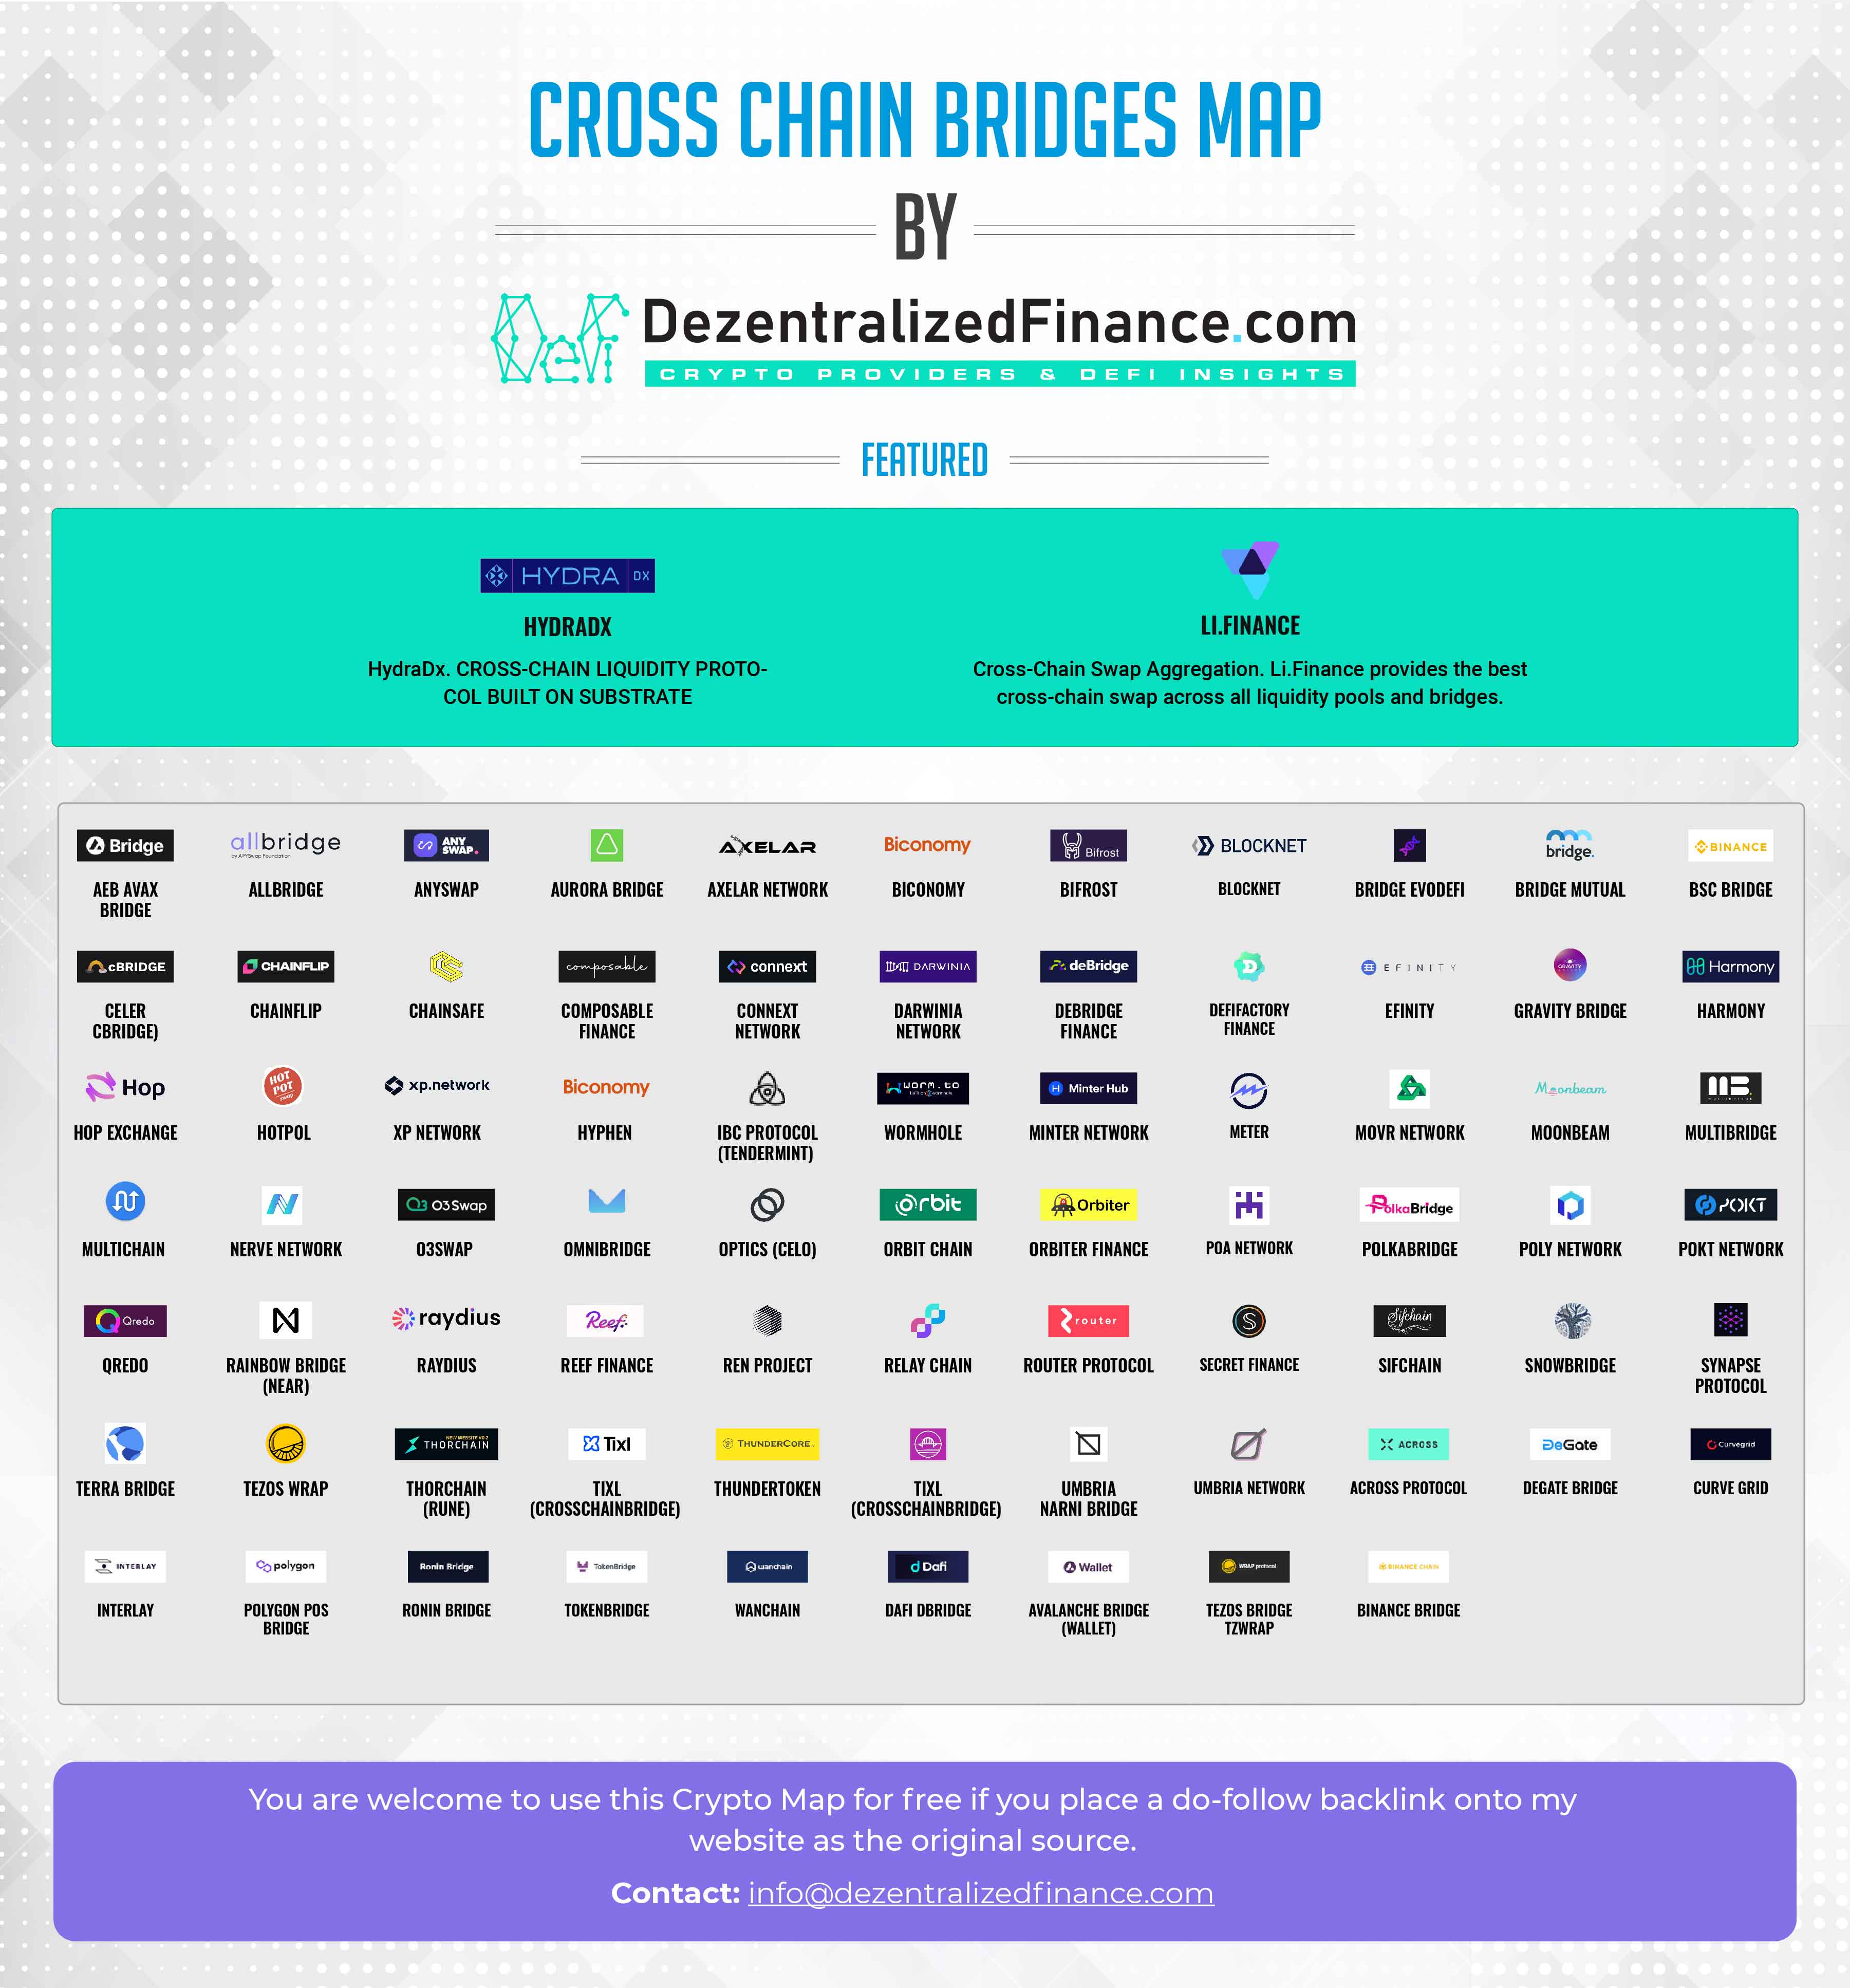 Cross-chain bridges map, Source: Dezentralizedfinance.com, May 2022